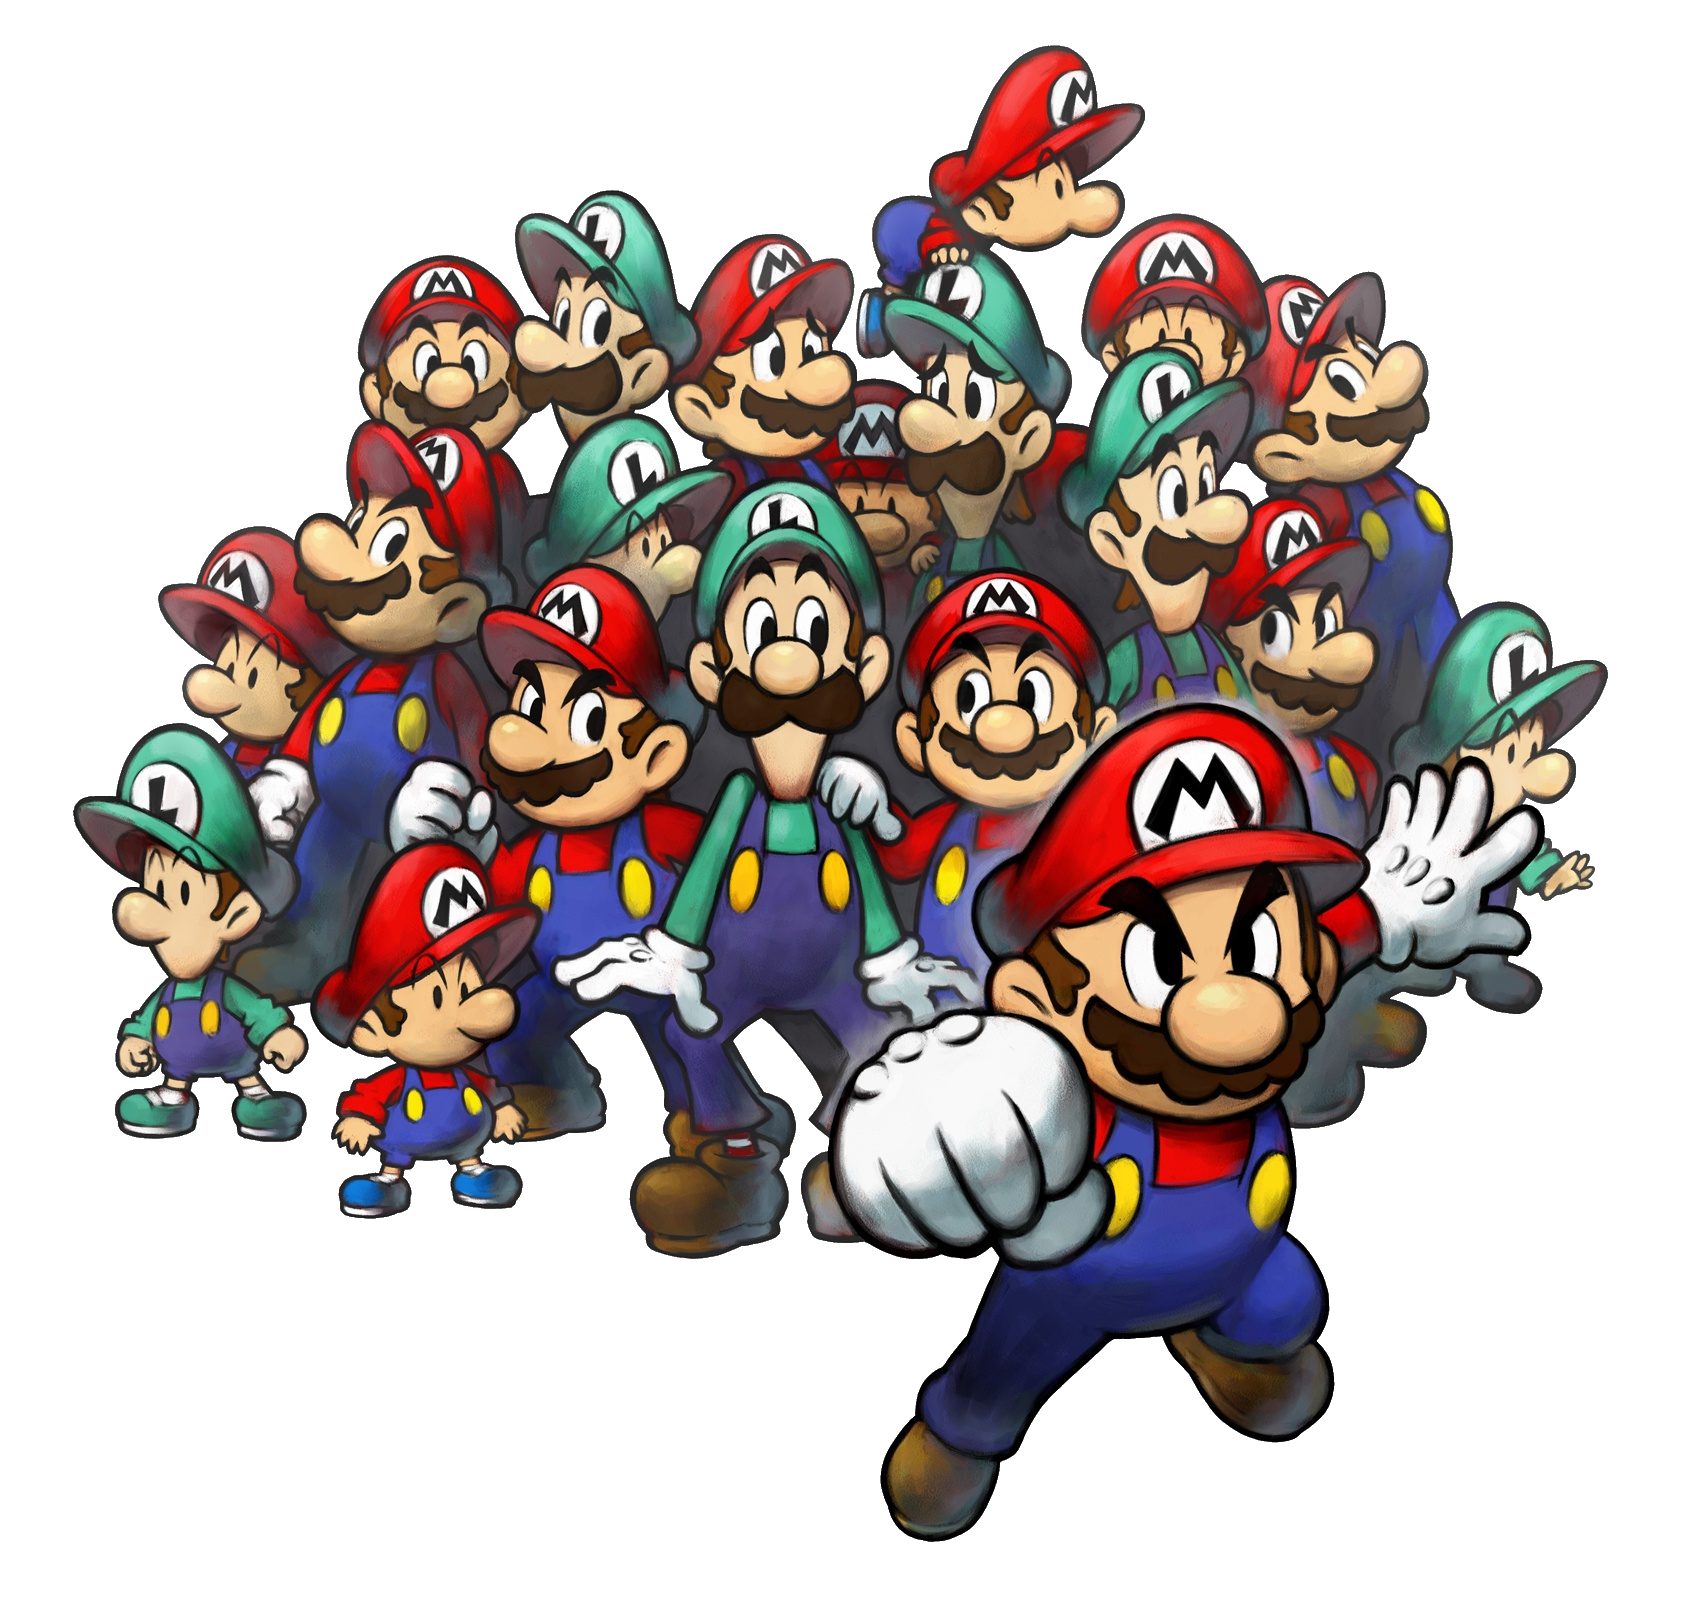 Супер марио версии. Марио персонажи Луиджи. Луиджи (персонаж) персонажи игр Mario. Нинтендо персонажи Луиджи. Супер Марио БРОС персонажи.